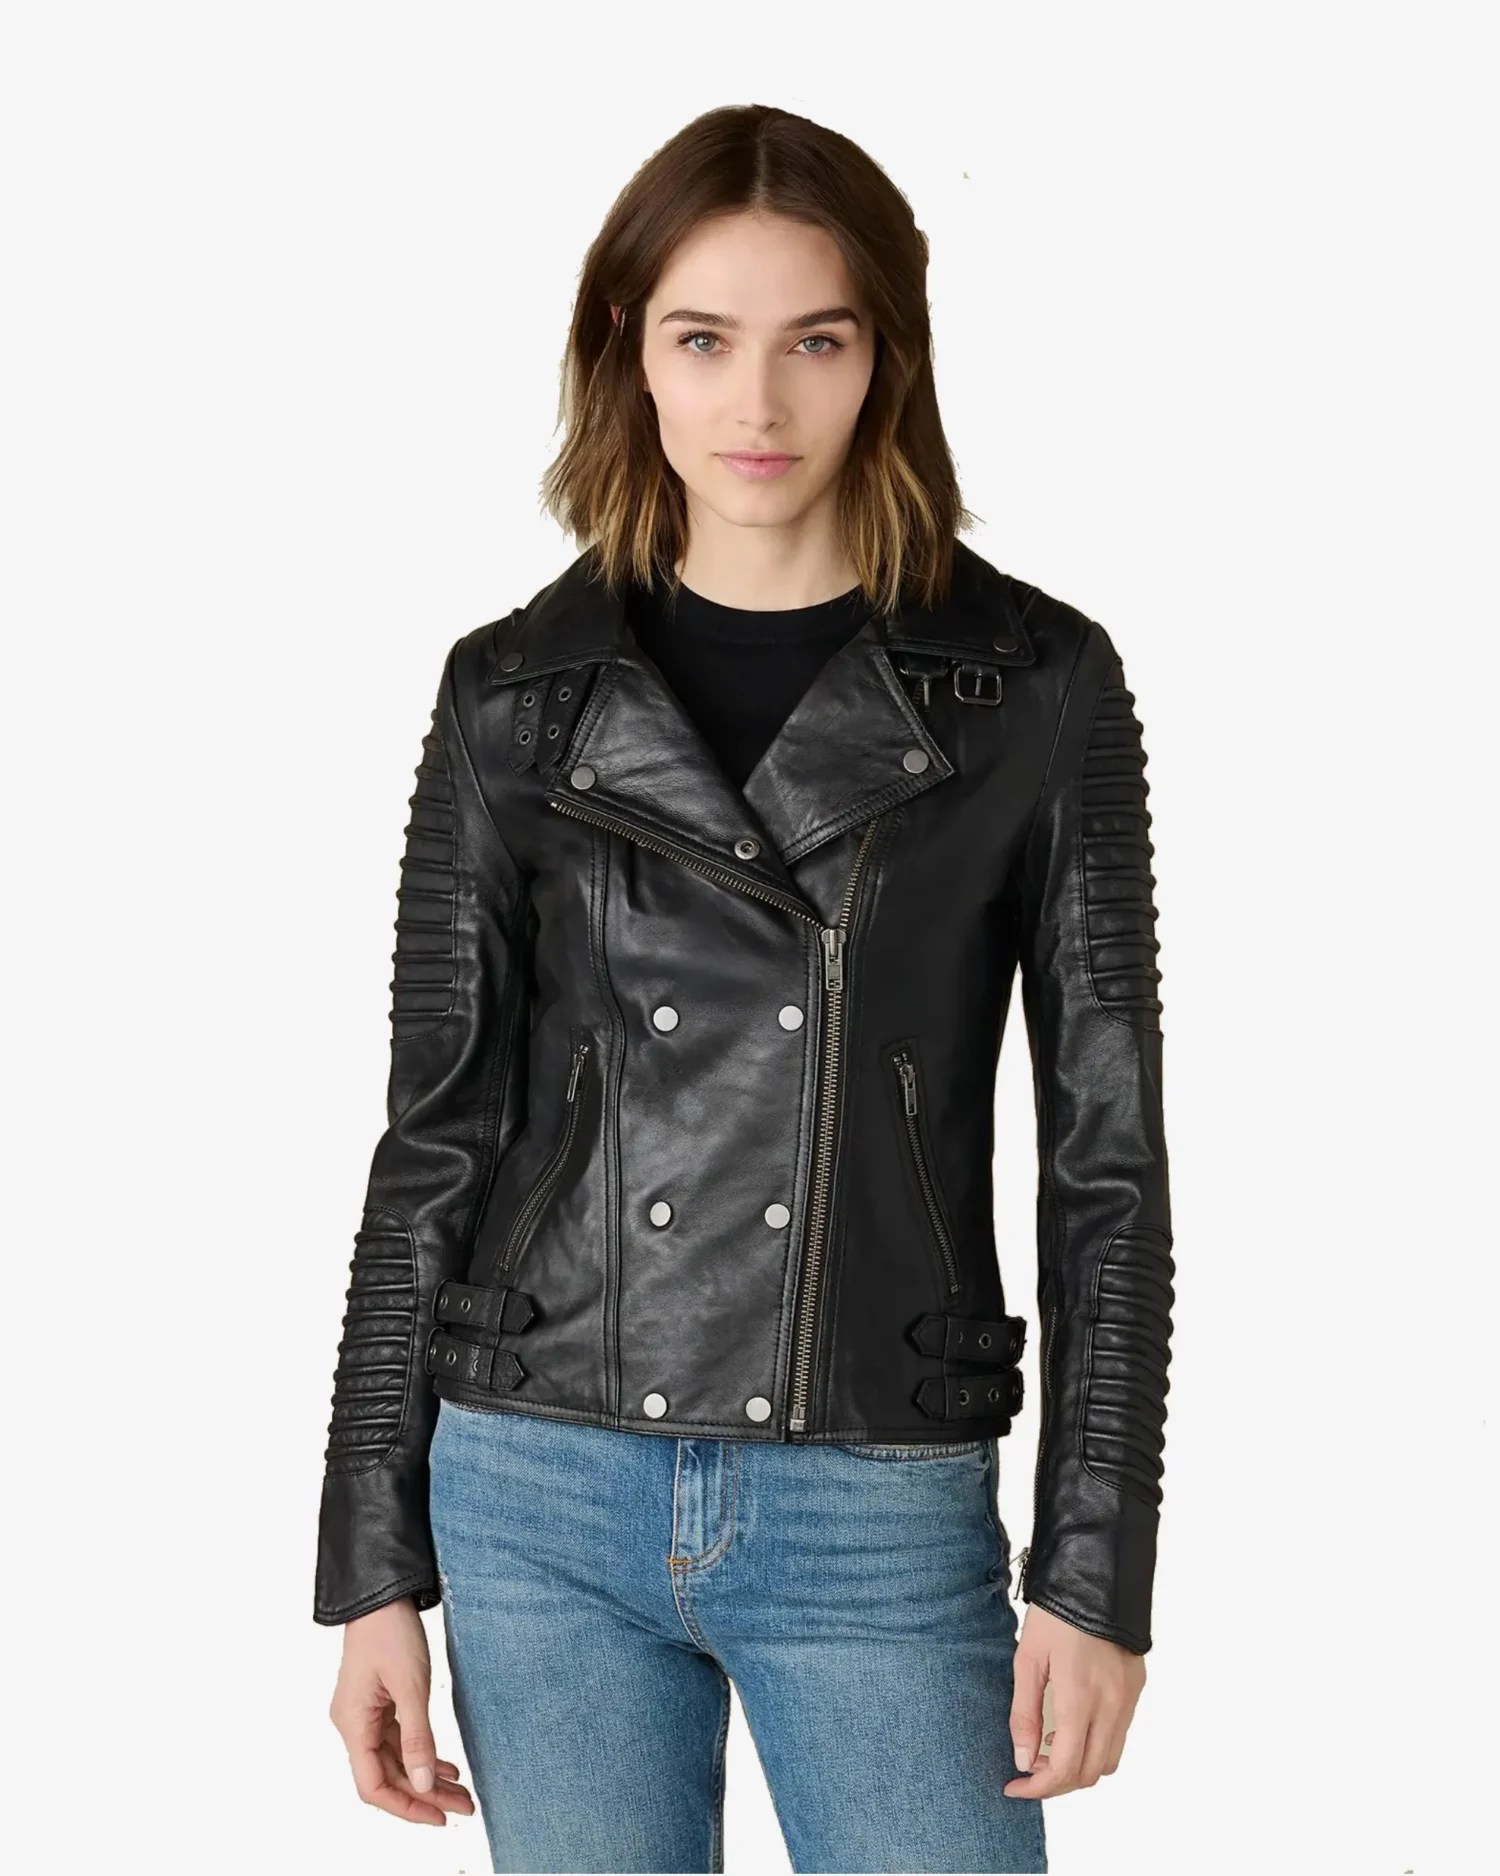 brandy-black-quilted-biker-leather-jacket-100-genuine-lambskin (3)